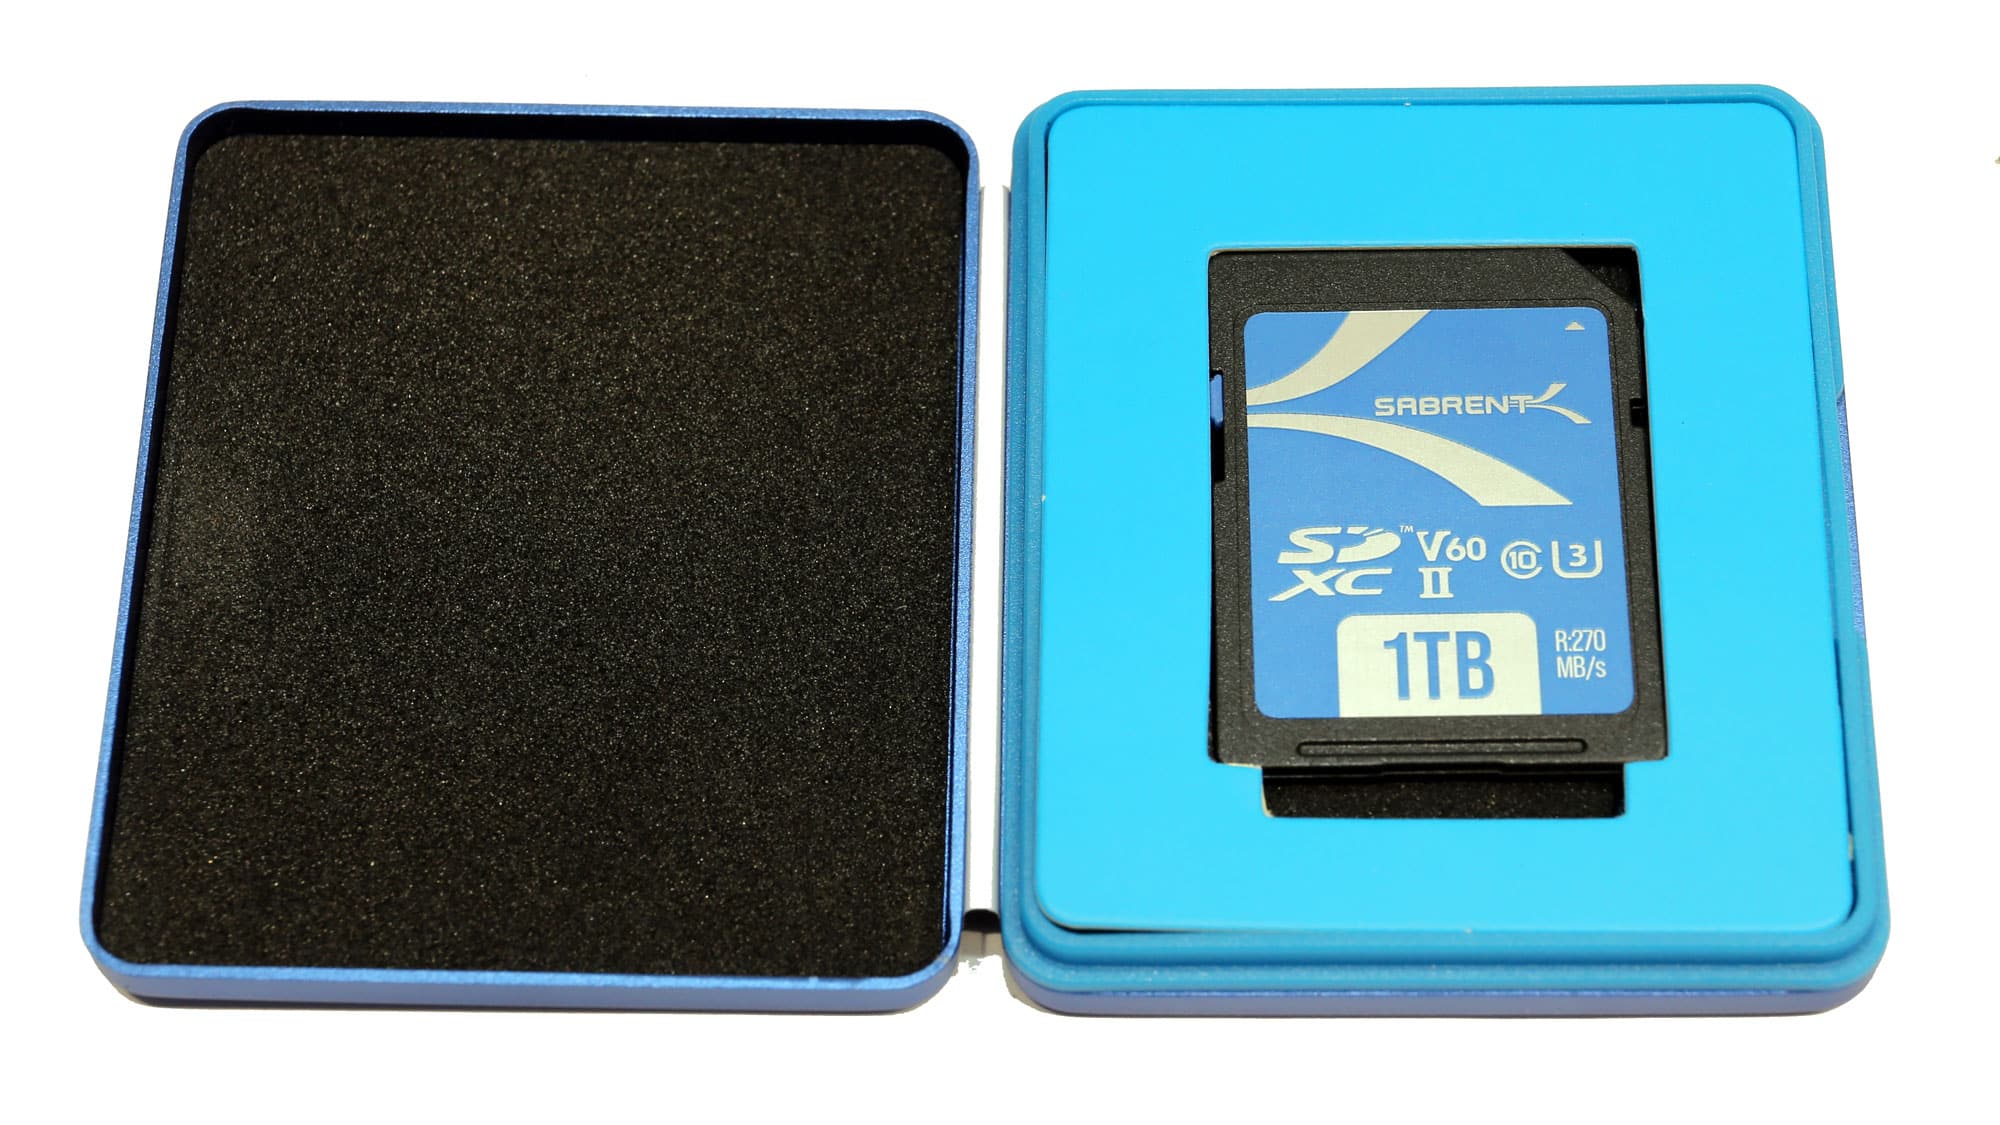 Sabrent 256GB Rocket UHS-II SDXC Memory Card SD-TL60-256GB B&H